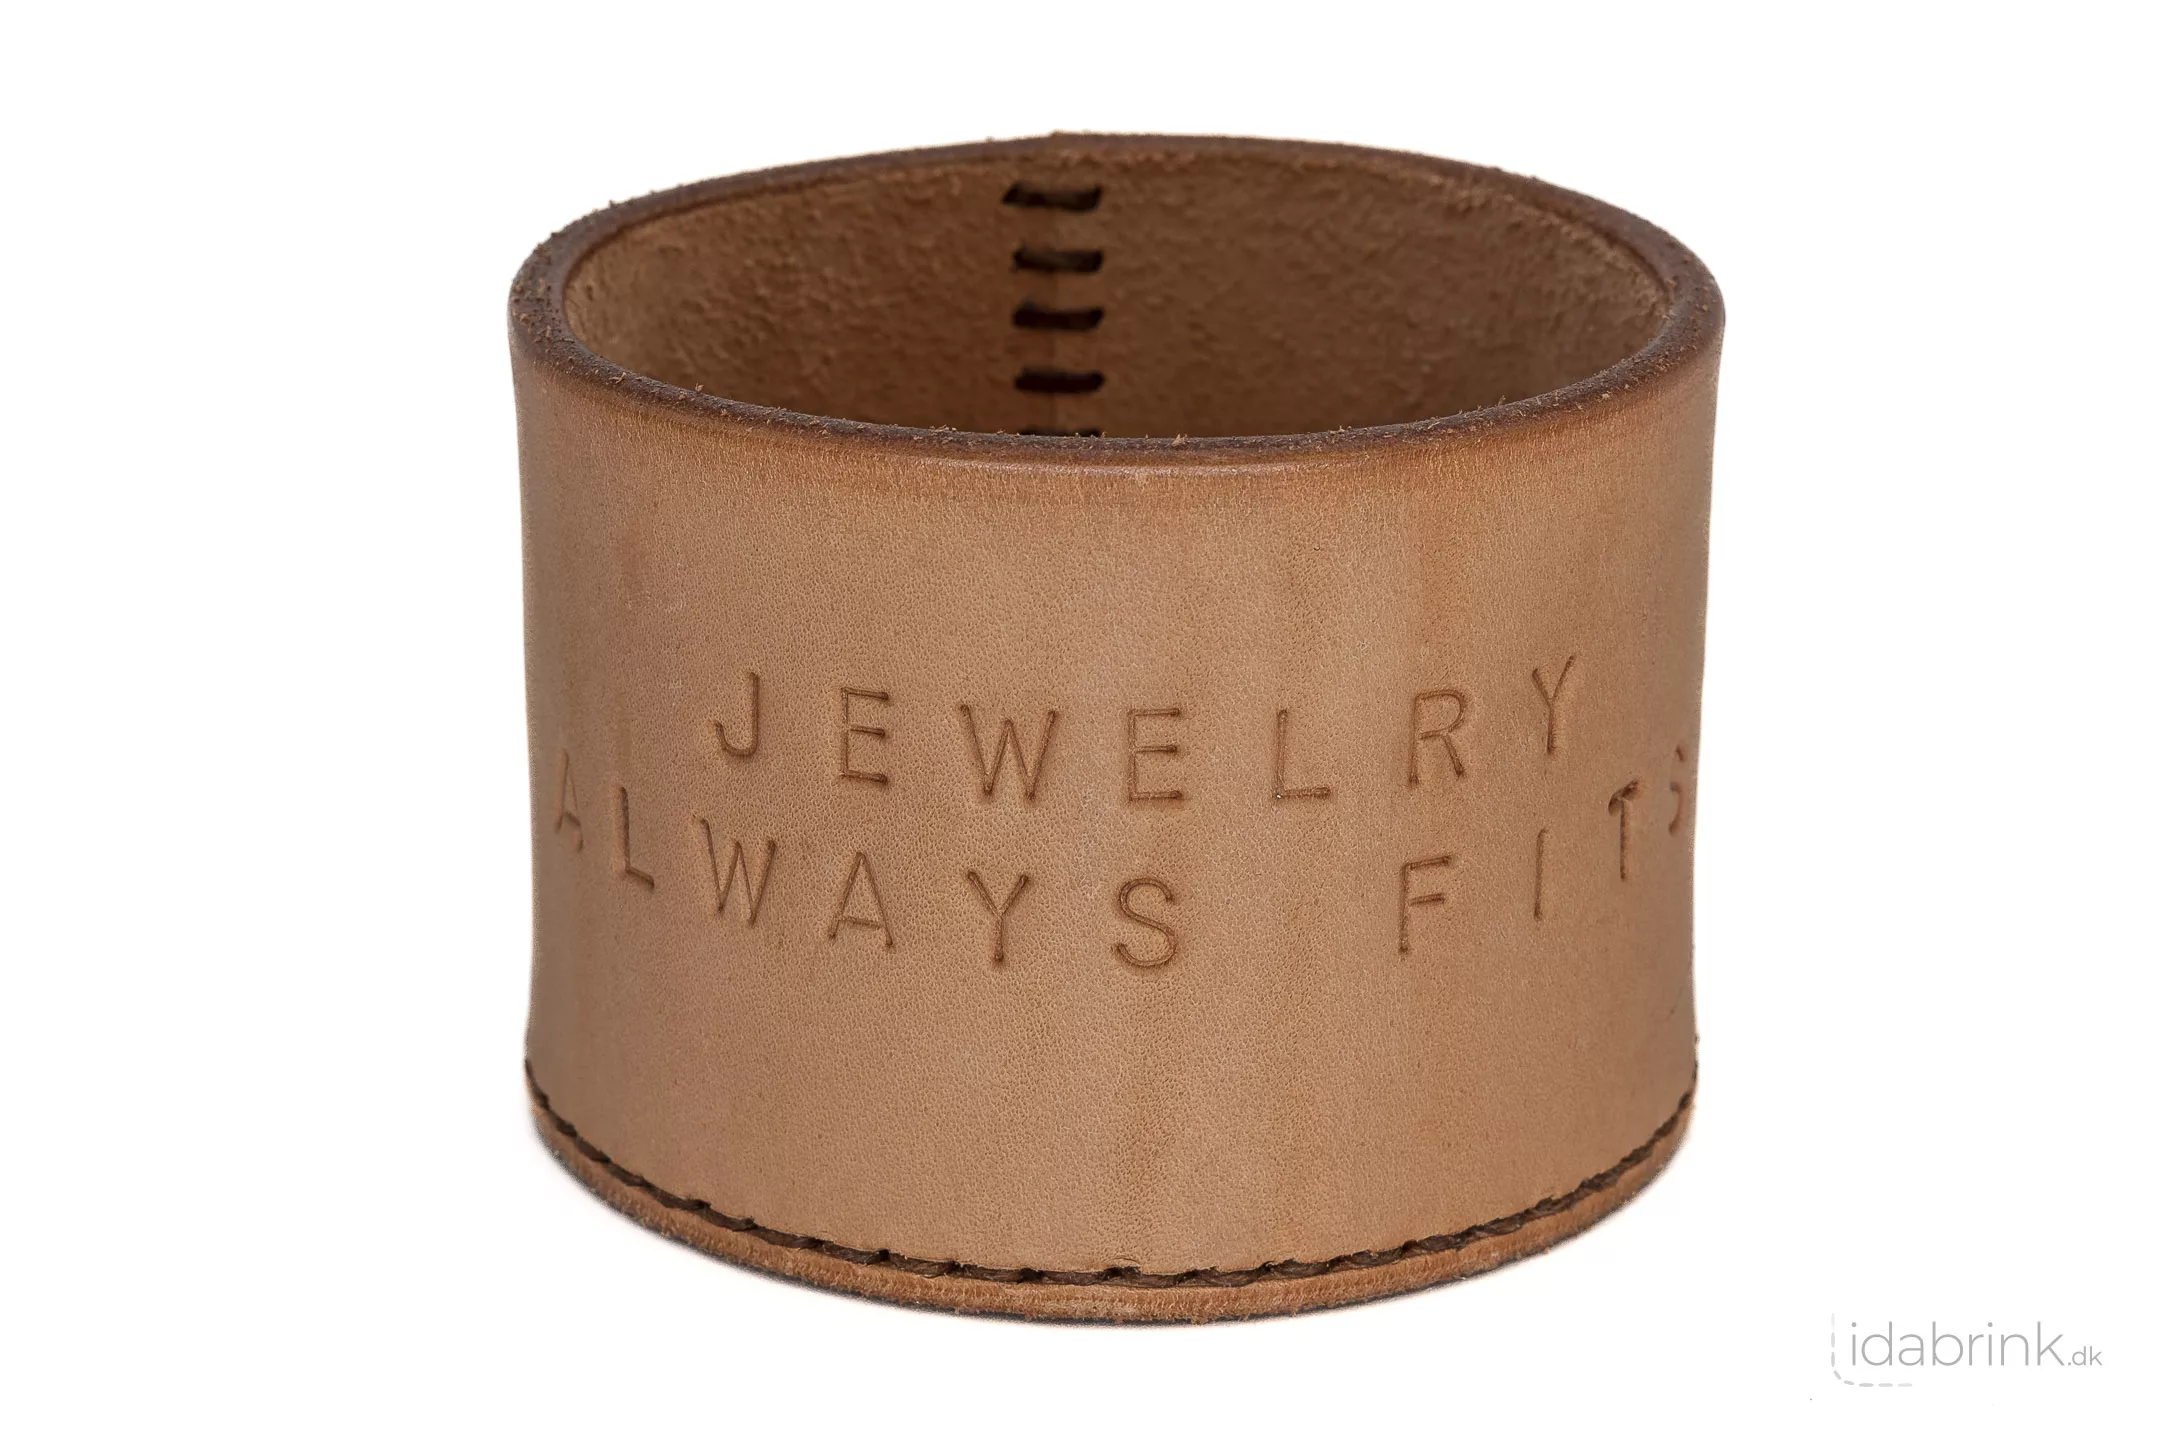 Stor smykkeboks - Eva - Jewelry always fits - fra Ida Brink Leather